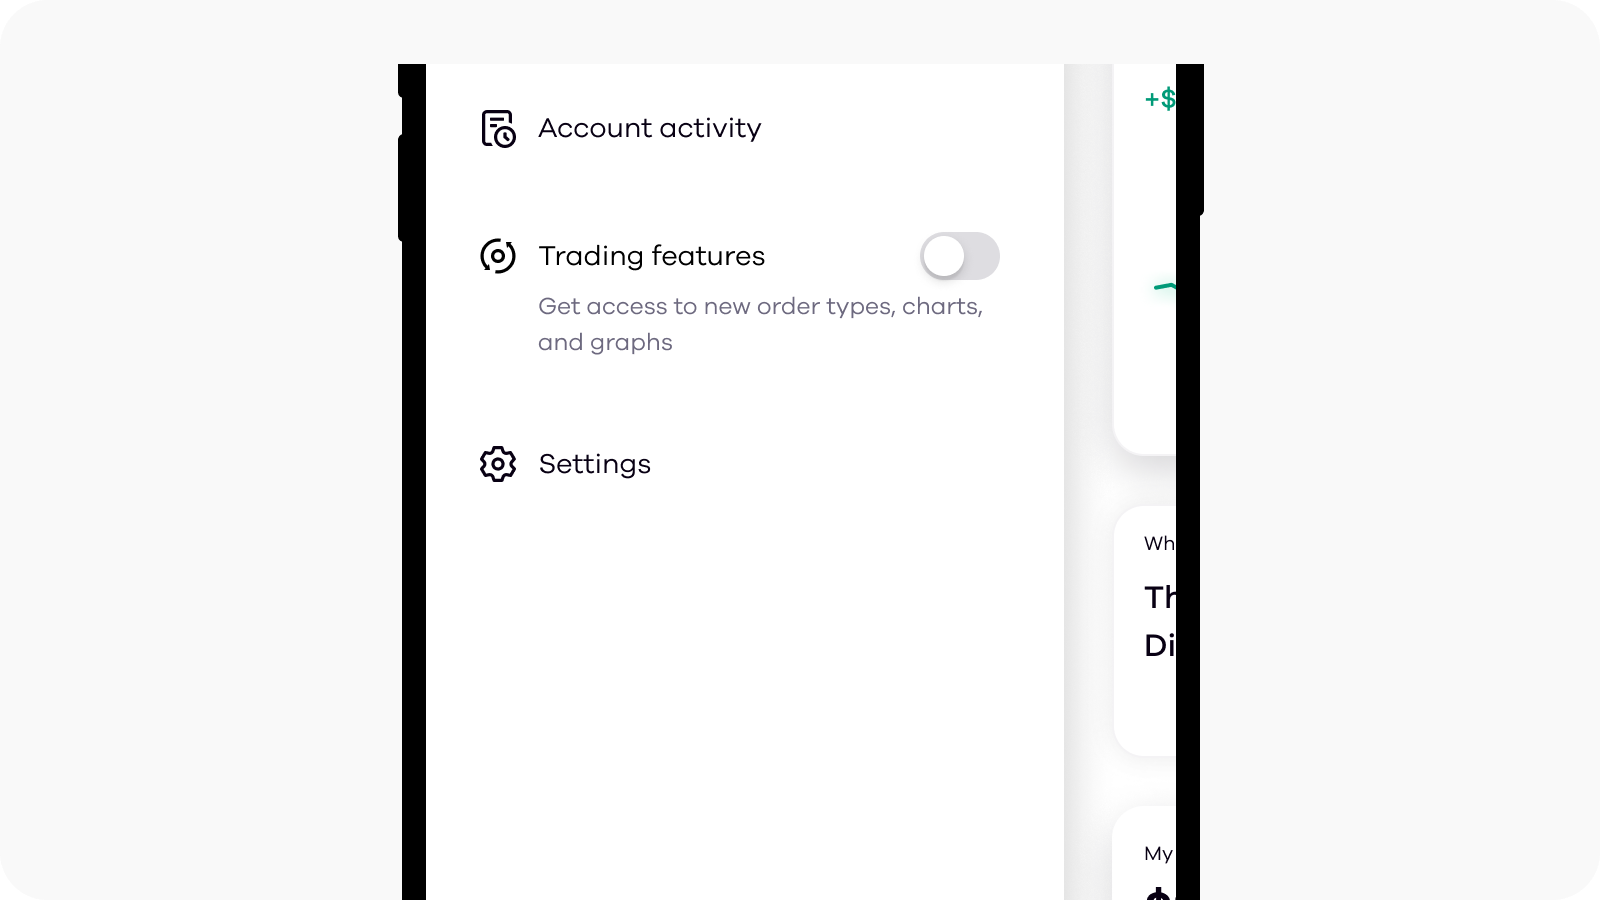 okcoin app side menu with settings